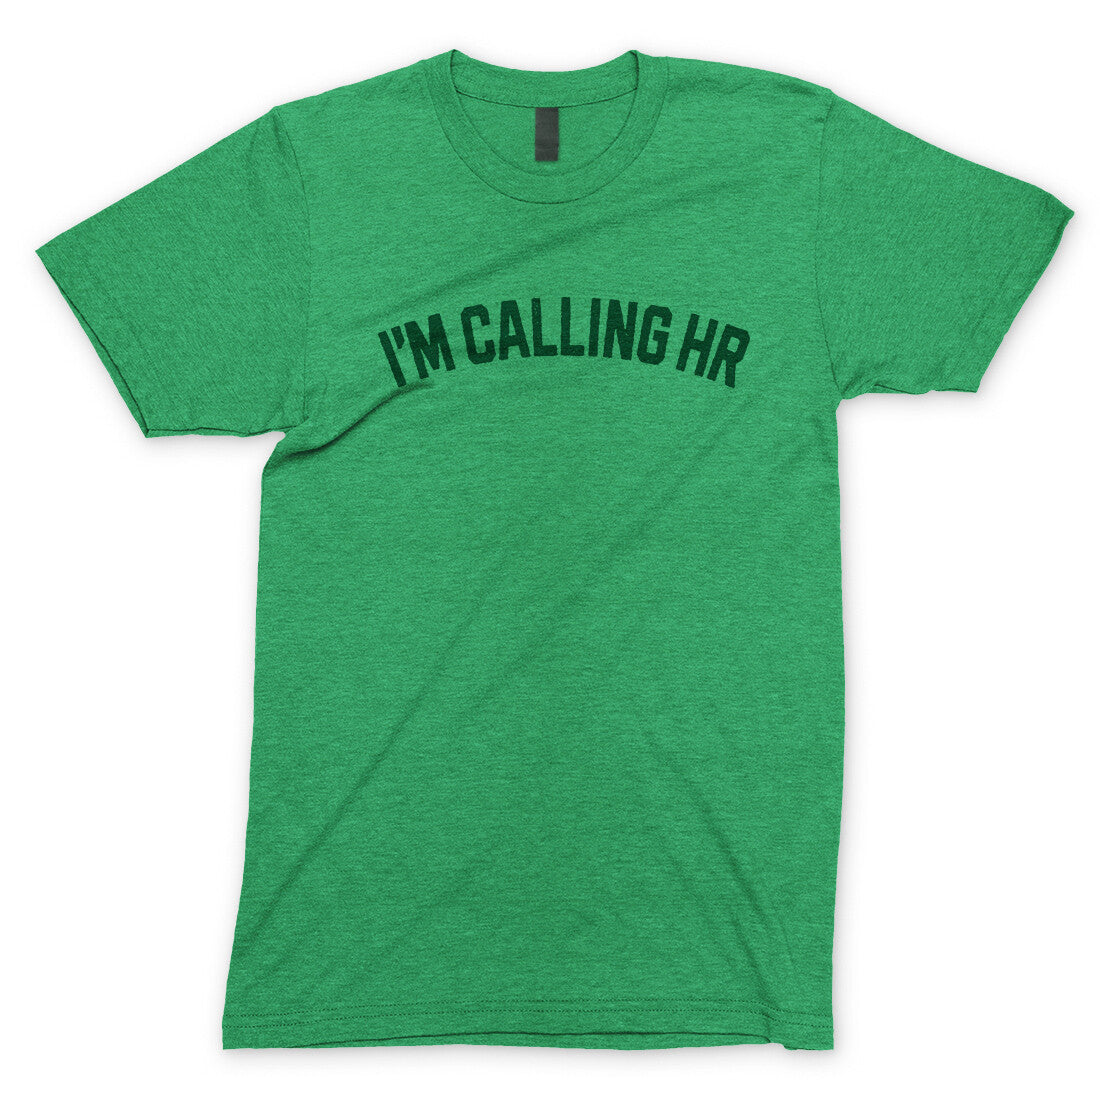 I'm Calling HR in Heather Irish Green Color